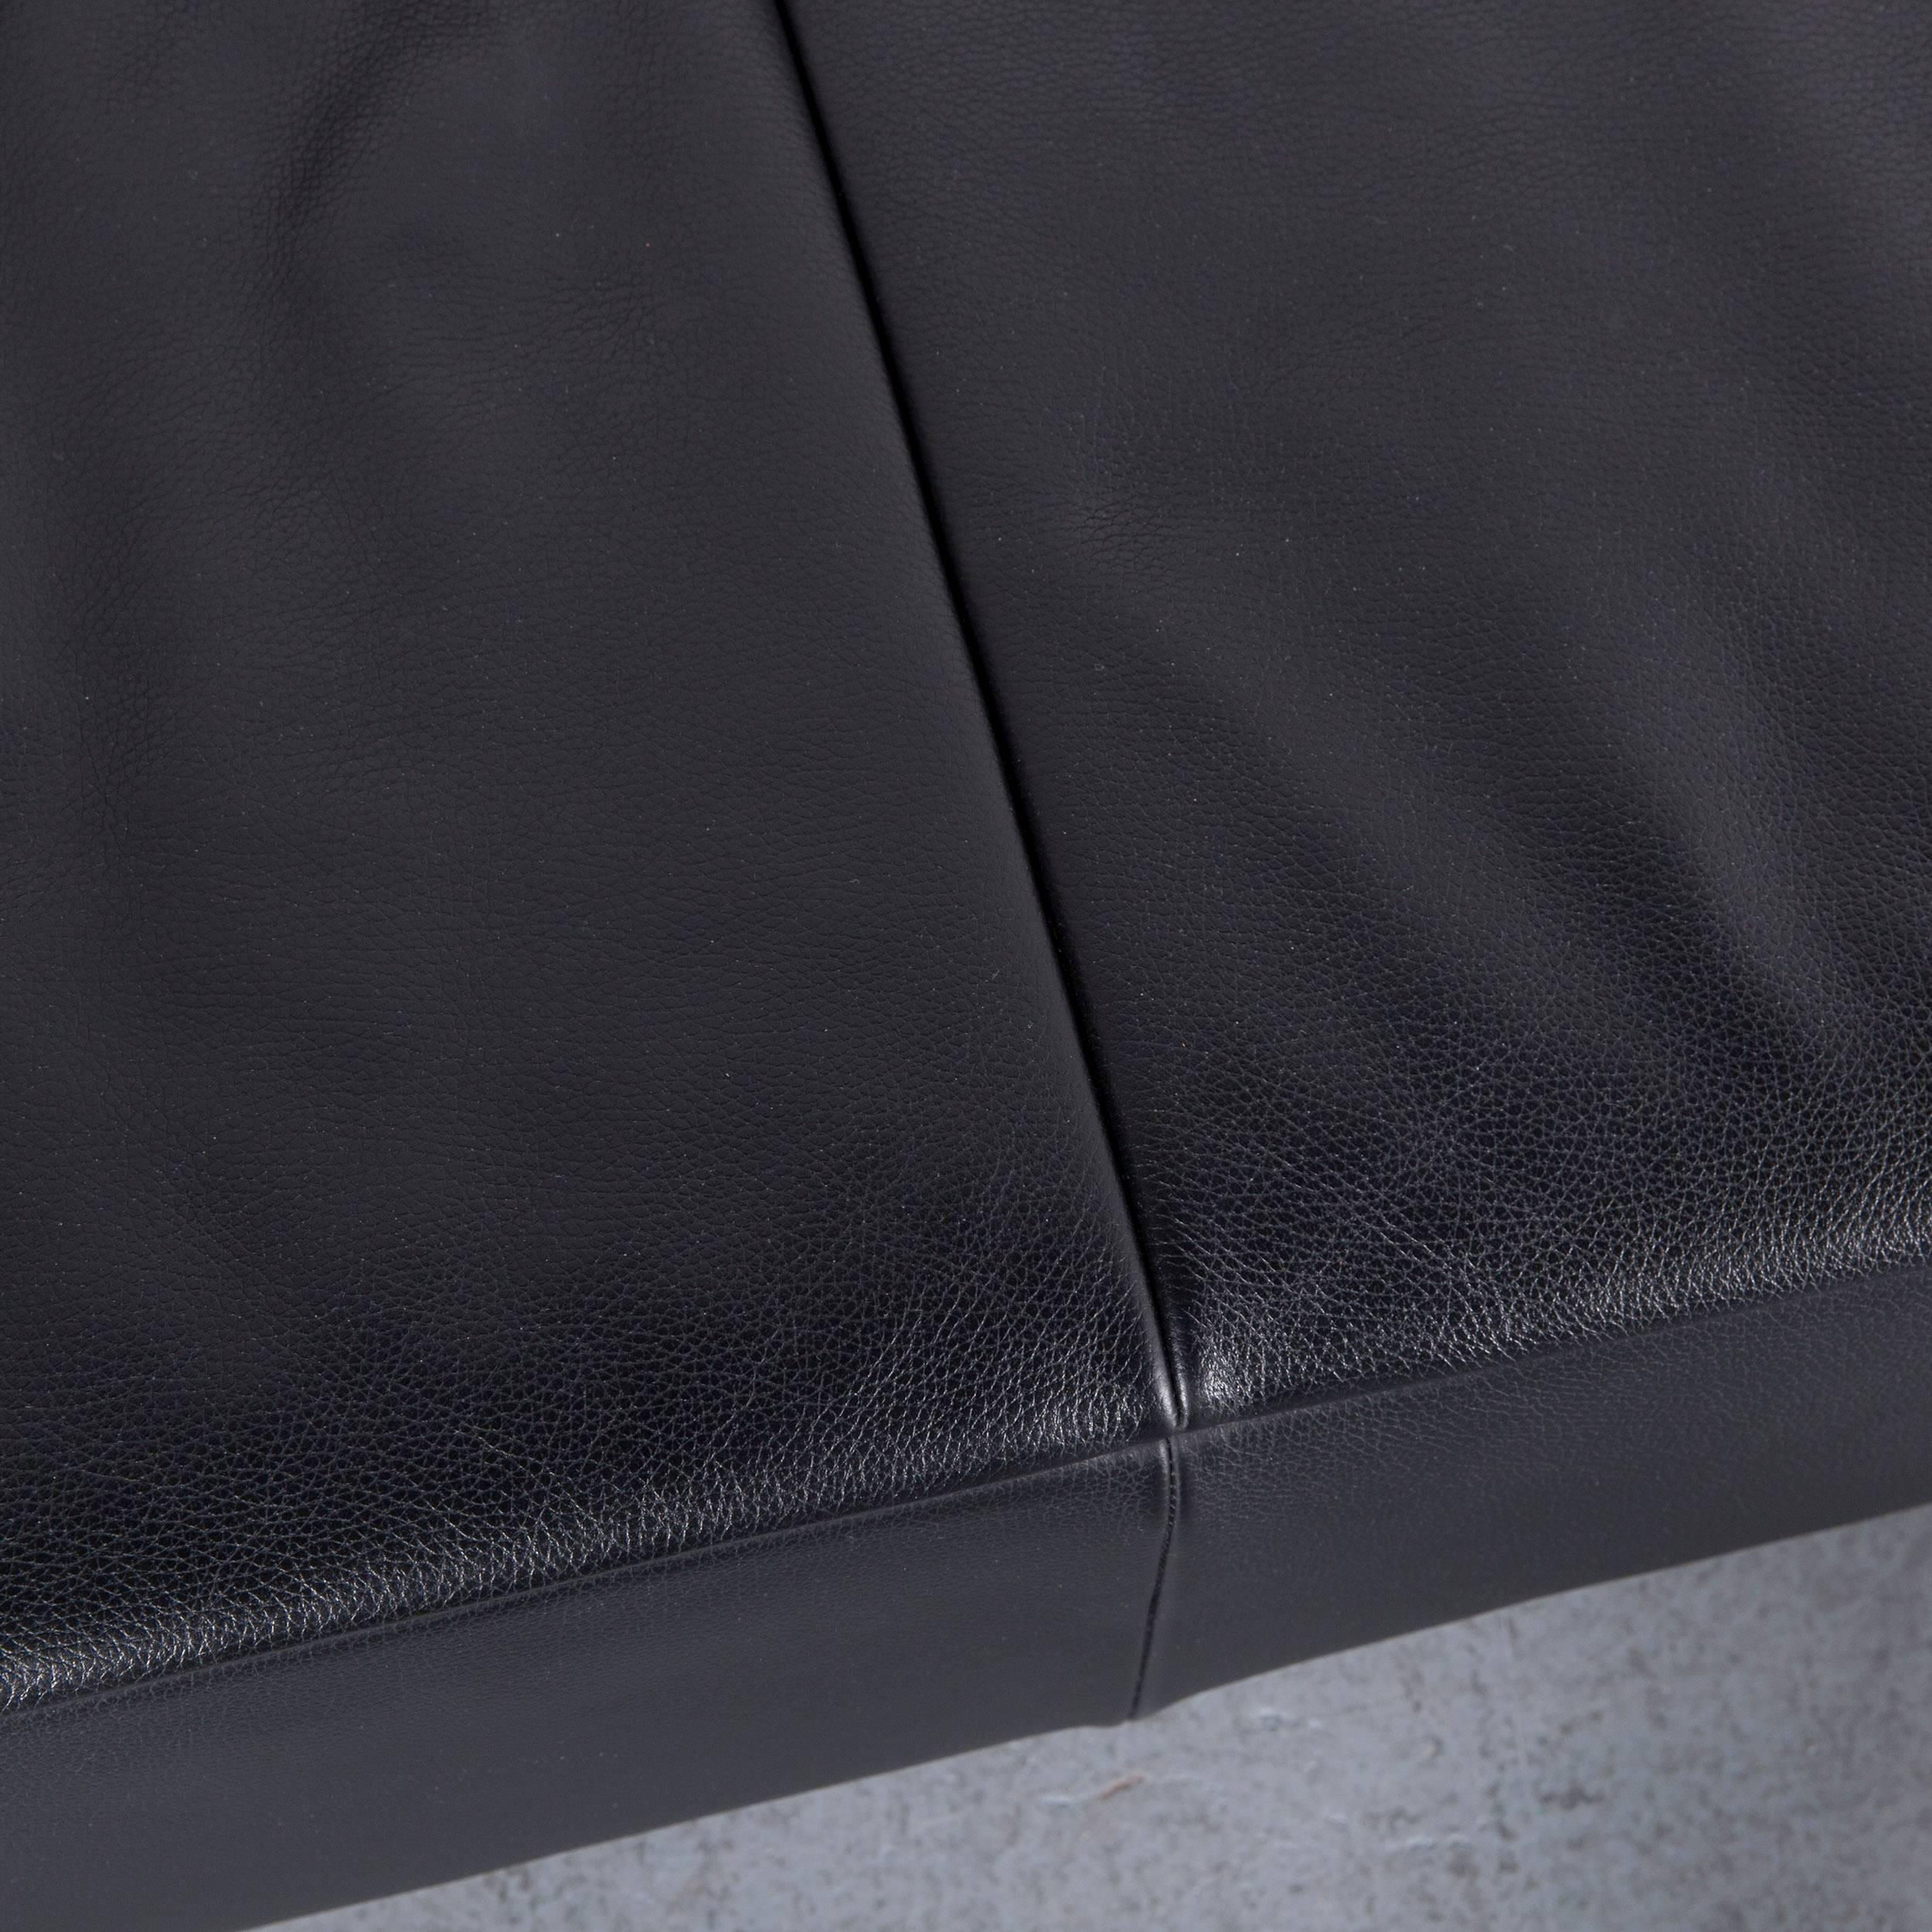 Contemporary Jori JR 9700 Leather Sofa Black Three-Seat Couch